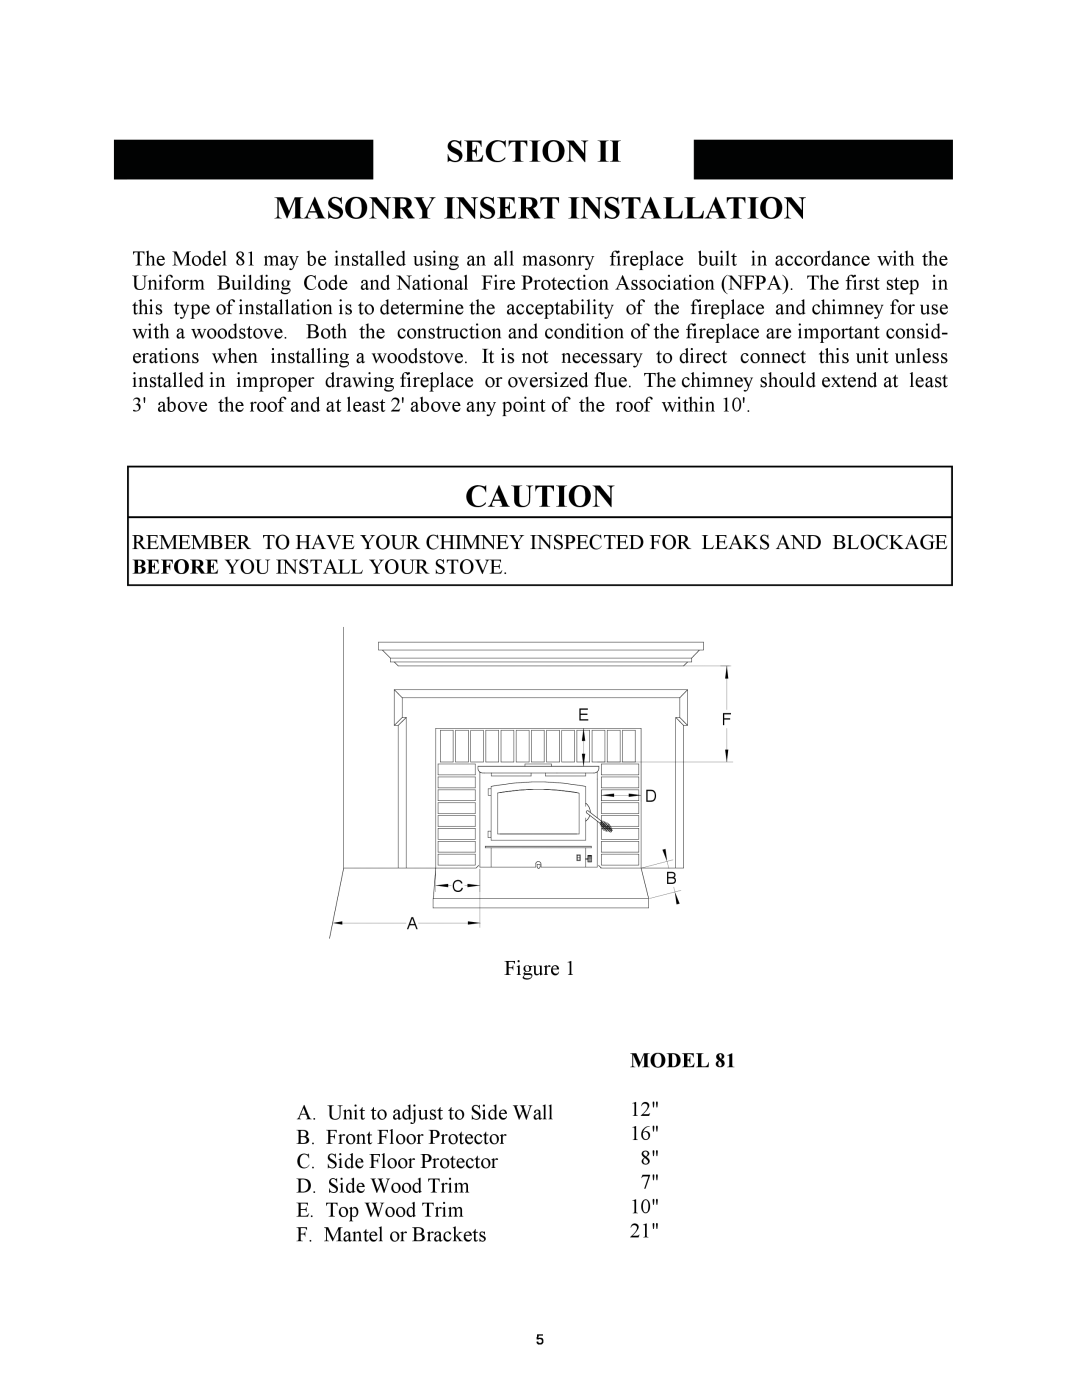 New Buck Corporation 81 installation instructions Section Masonry Insert Installation, Model 